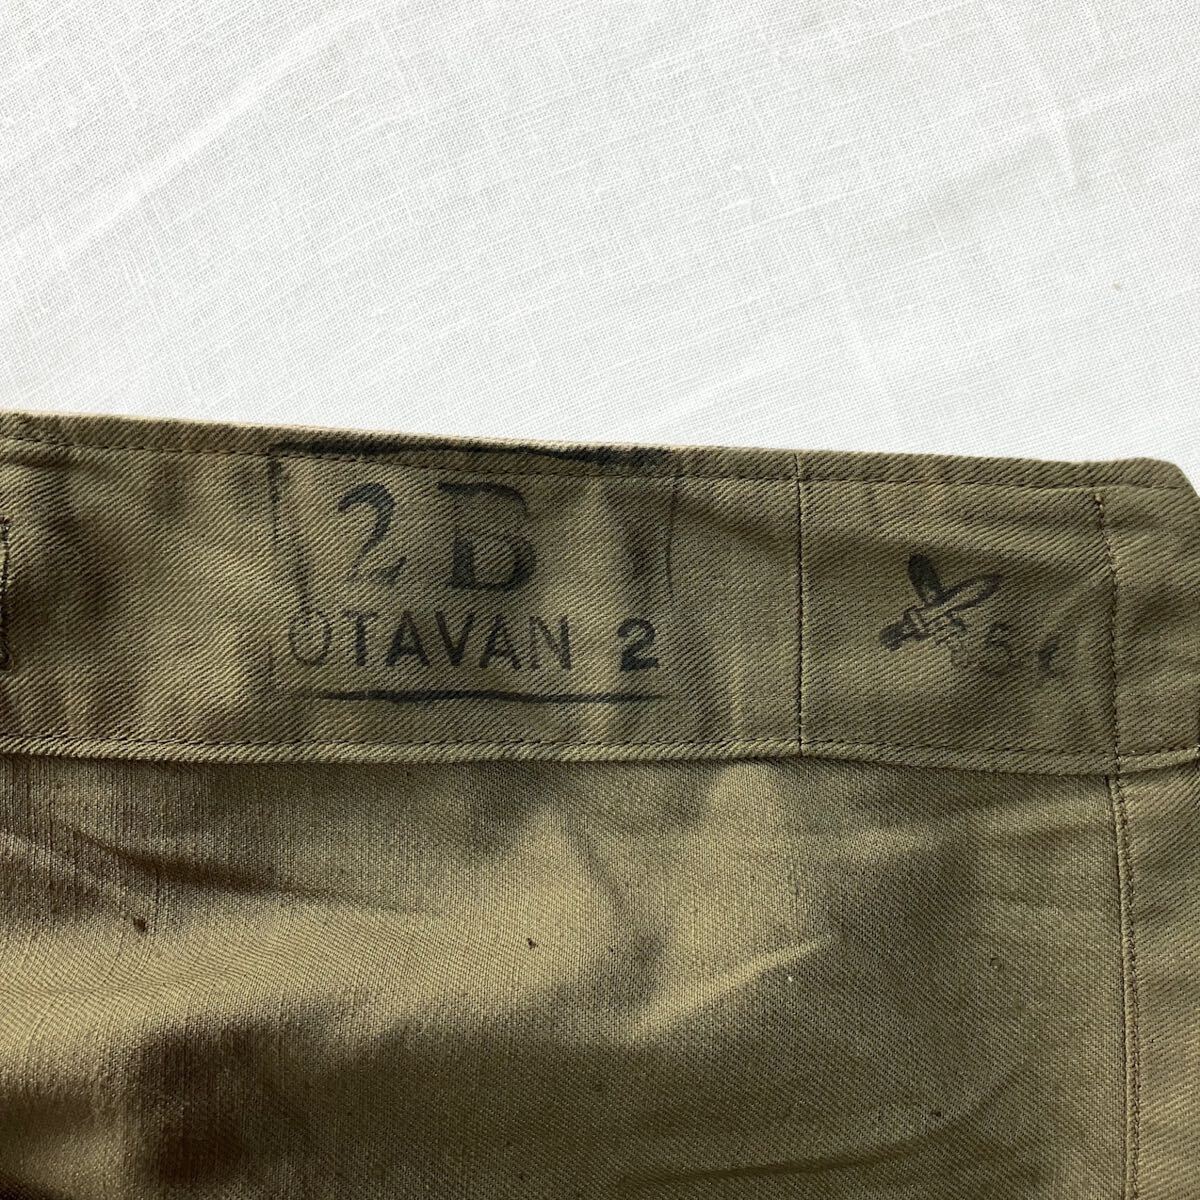  хорошая вещь 60s Чехия армия стандартный цвет Work жакет 2B Europe рубашка work shirt Франция армия Англия армия евро Vintage 